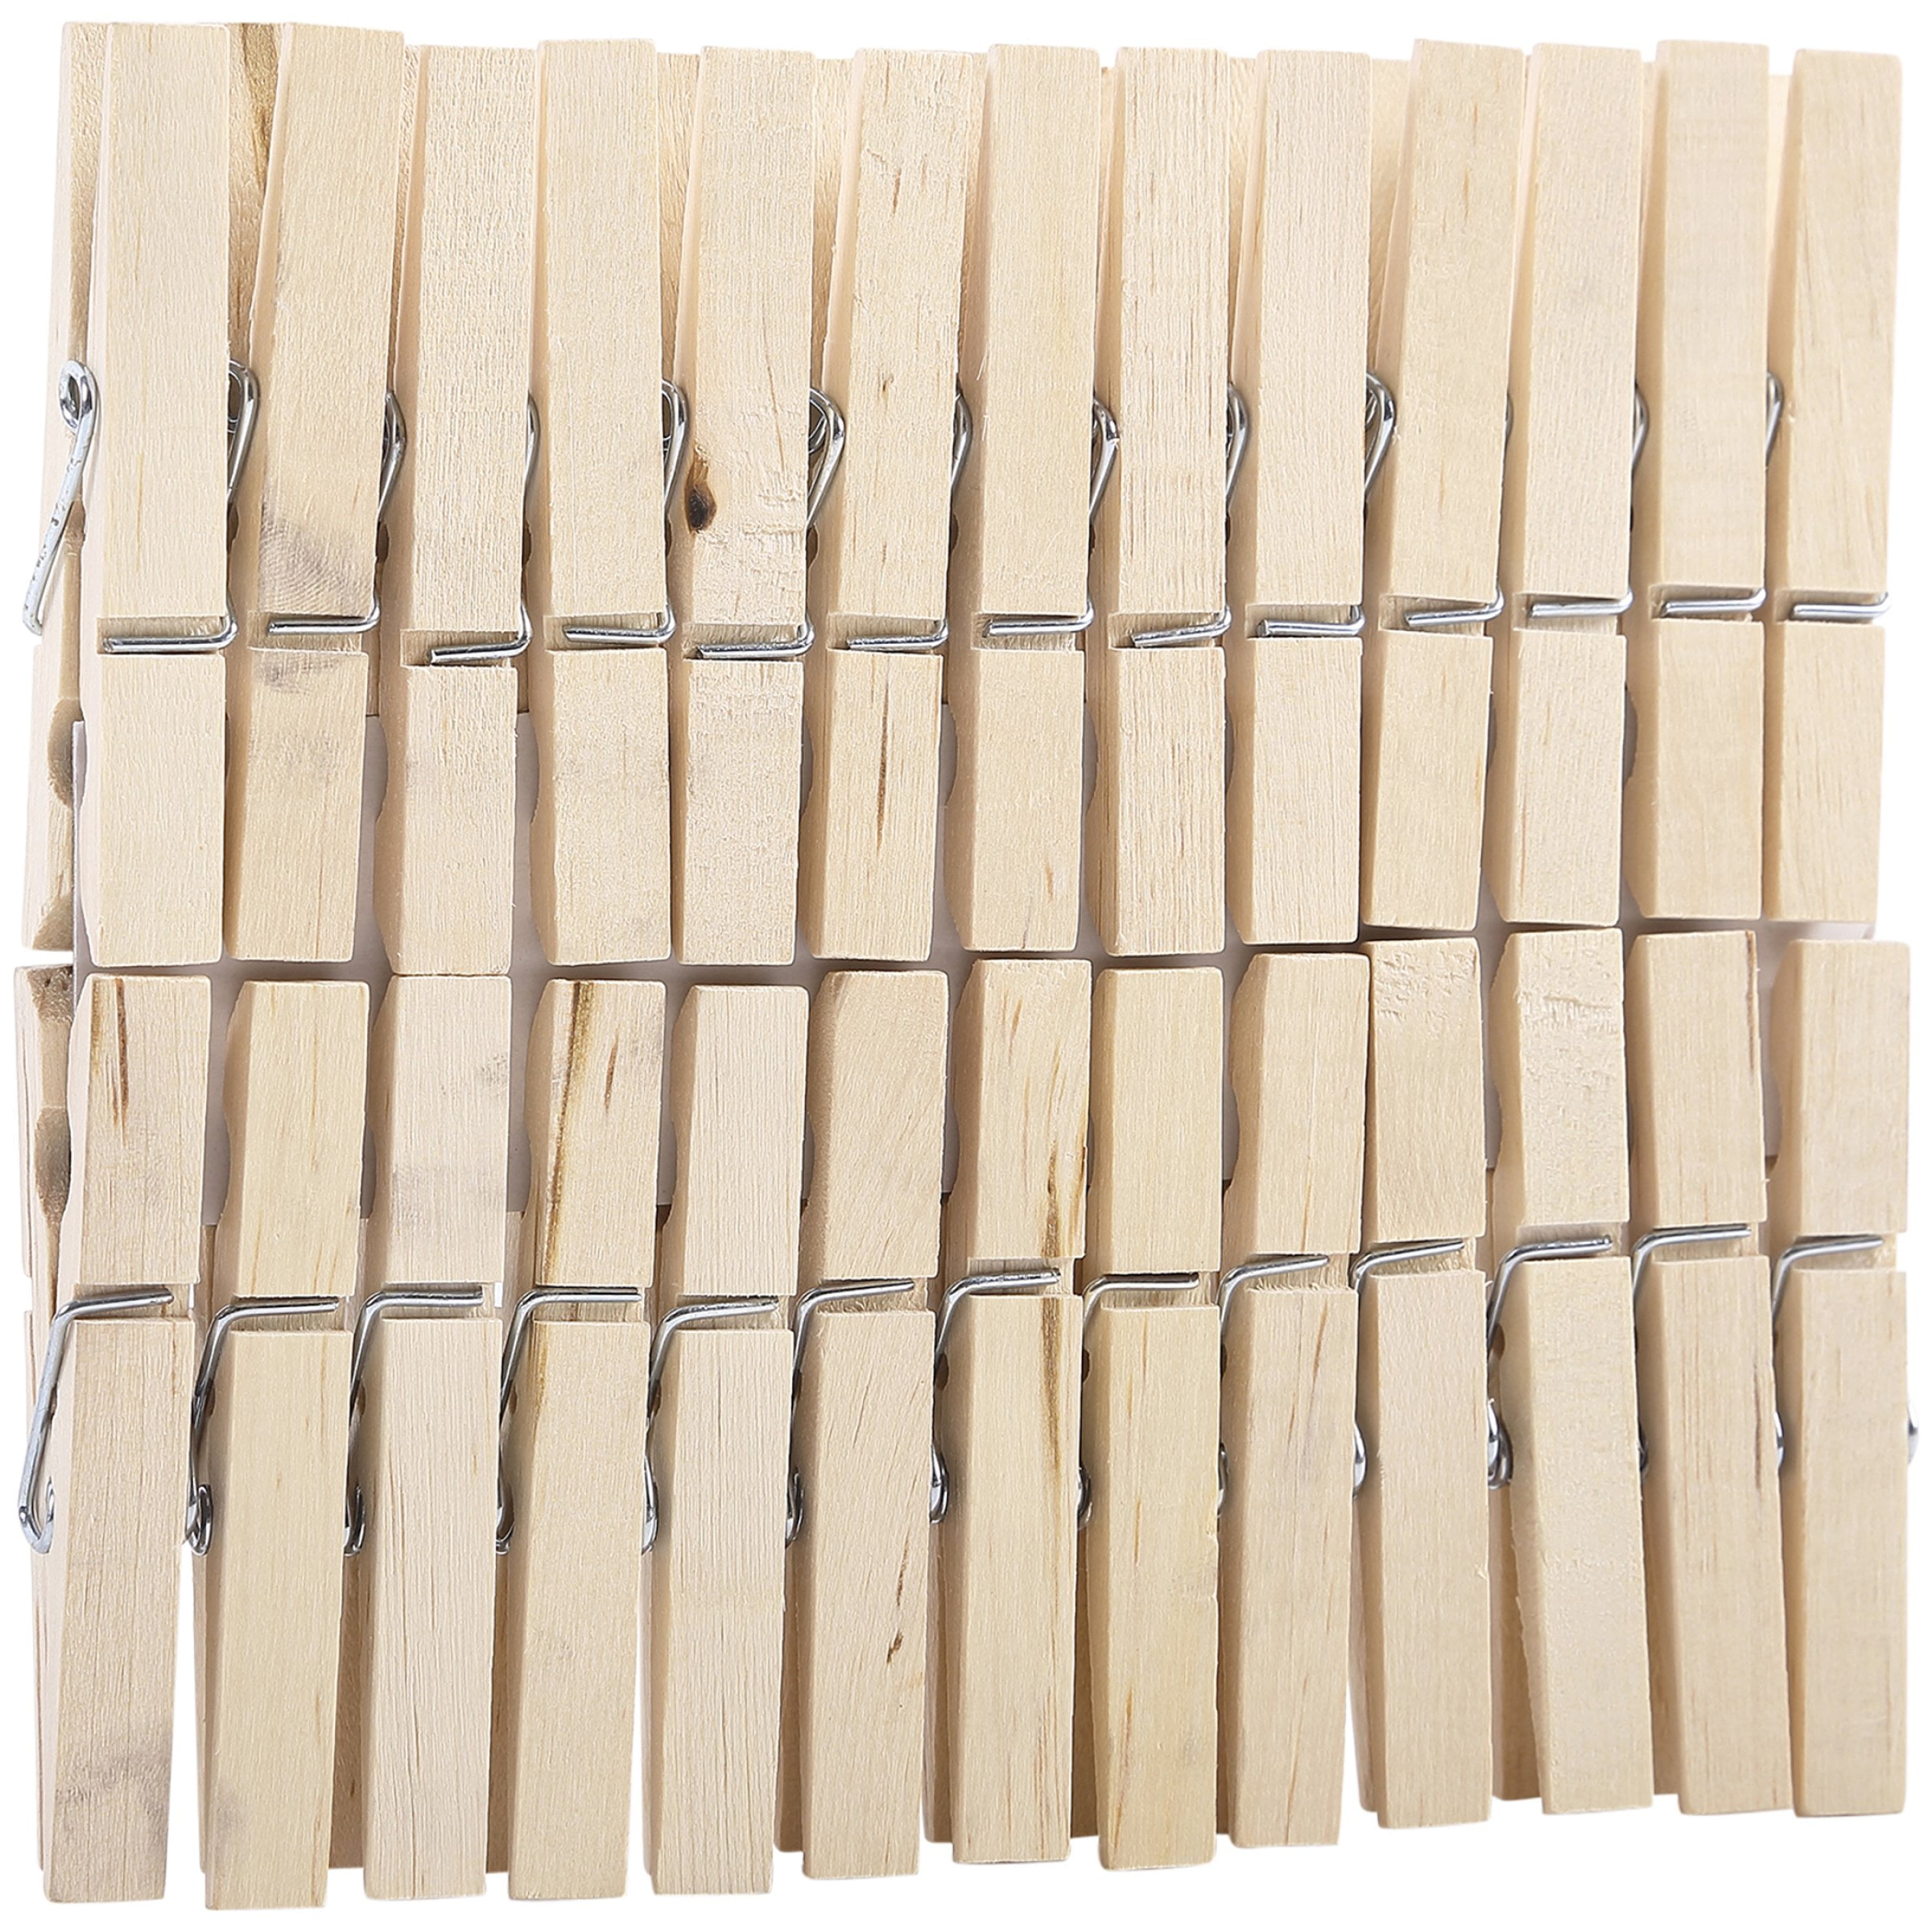 1 Beige Wood Clothespins 50pk by Park Lane